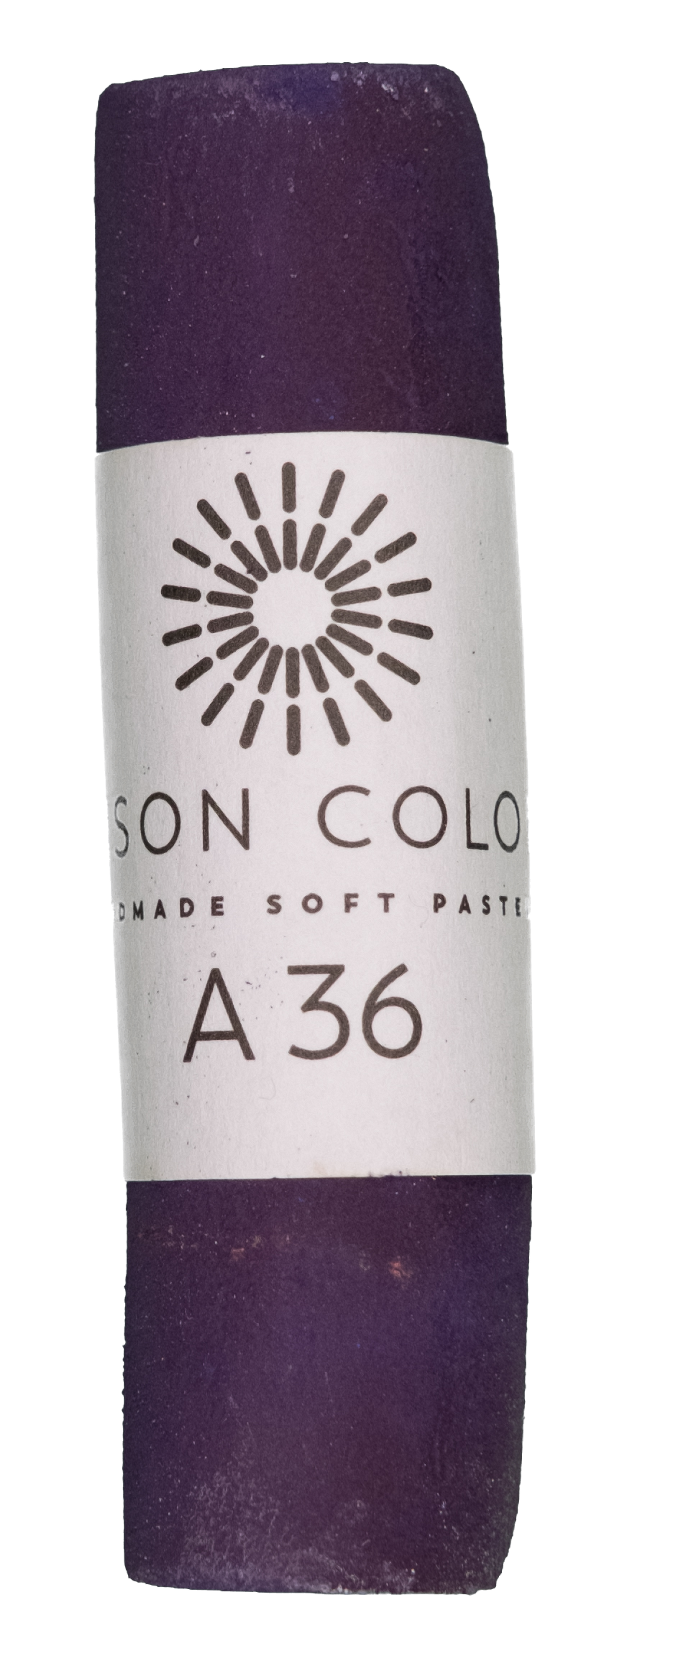 Unison Colour Handmade Soft Pastels Additional 36 Purple - Size Regular